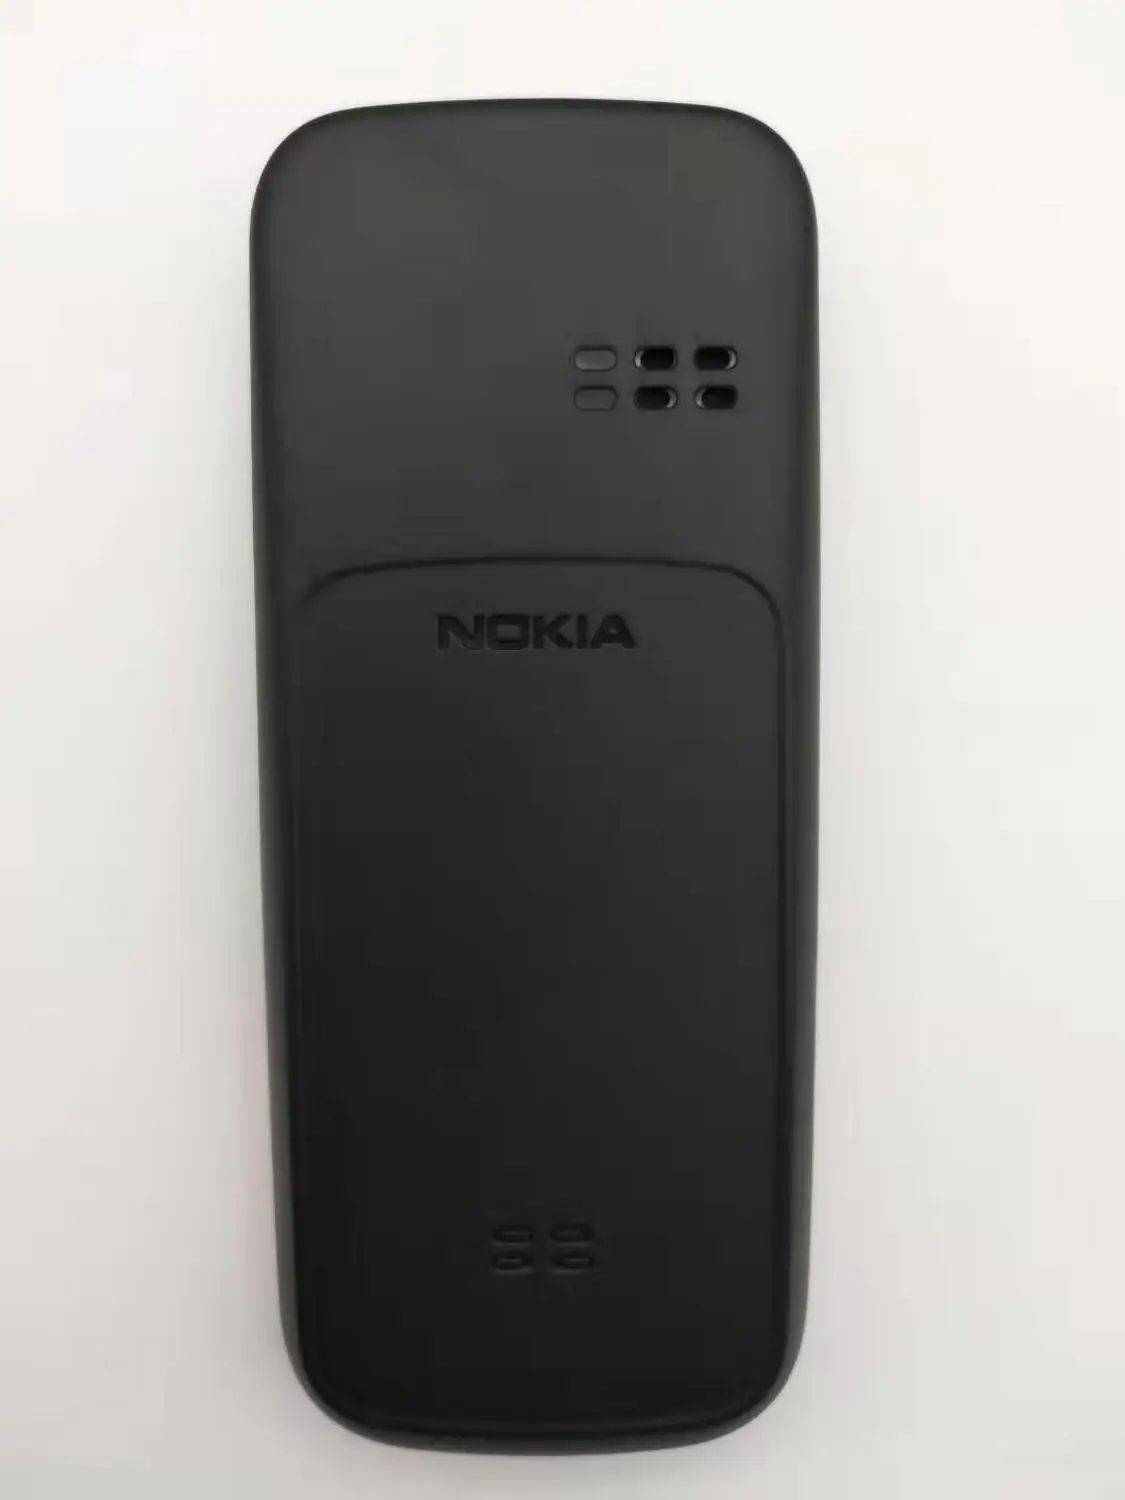 nokia 1010 refurbished original unlocked nokia 1010 dual sim card mobile phone one year warranty refurbished free global shipping